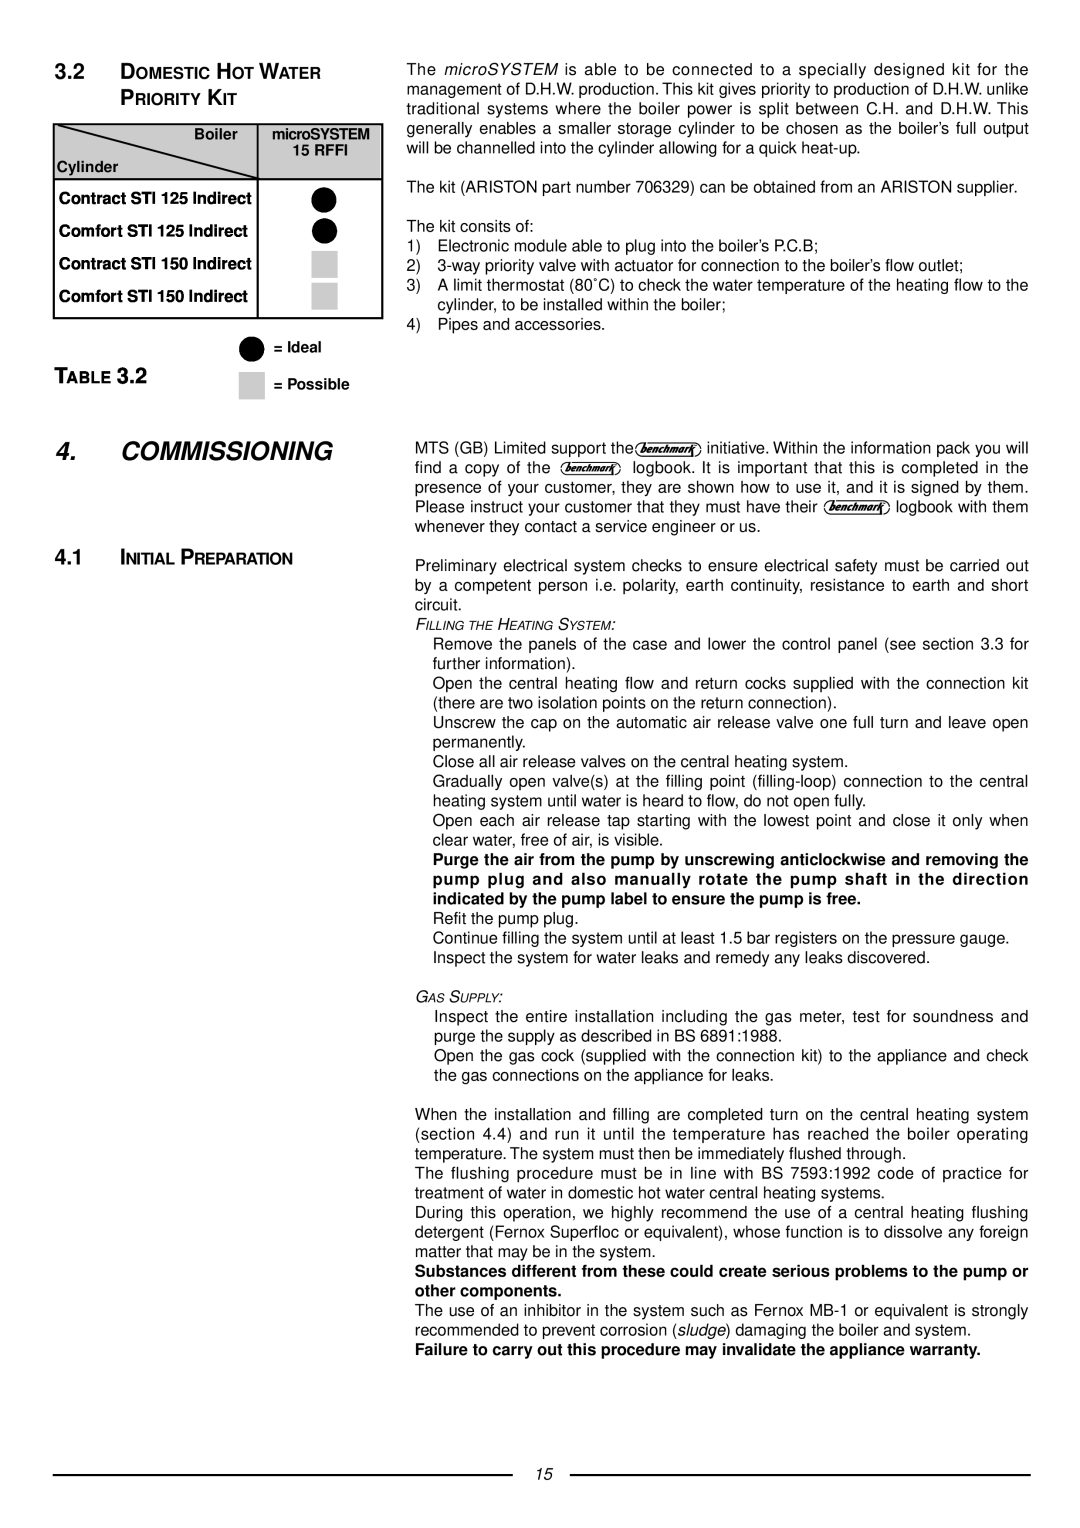 Ariston 41-116-05 Commissioning, Domestic Hot Water Priority Kit, Contract STI 125 Indirect Comfort STI 125 Indirect 